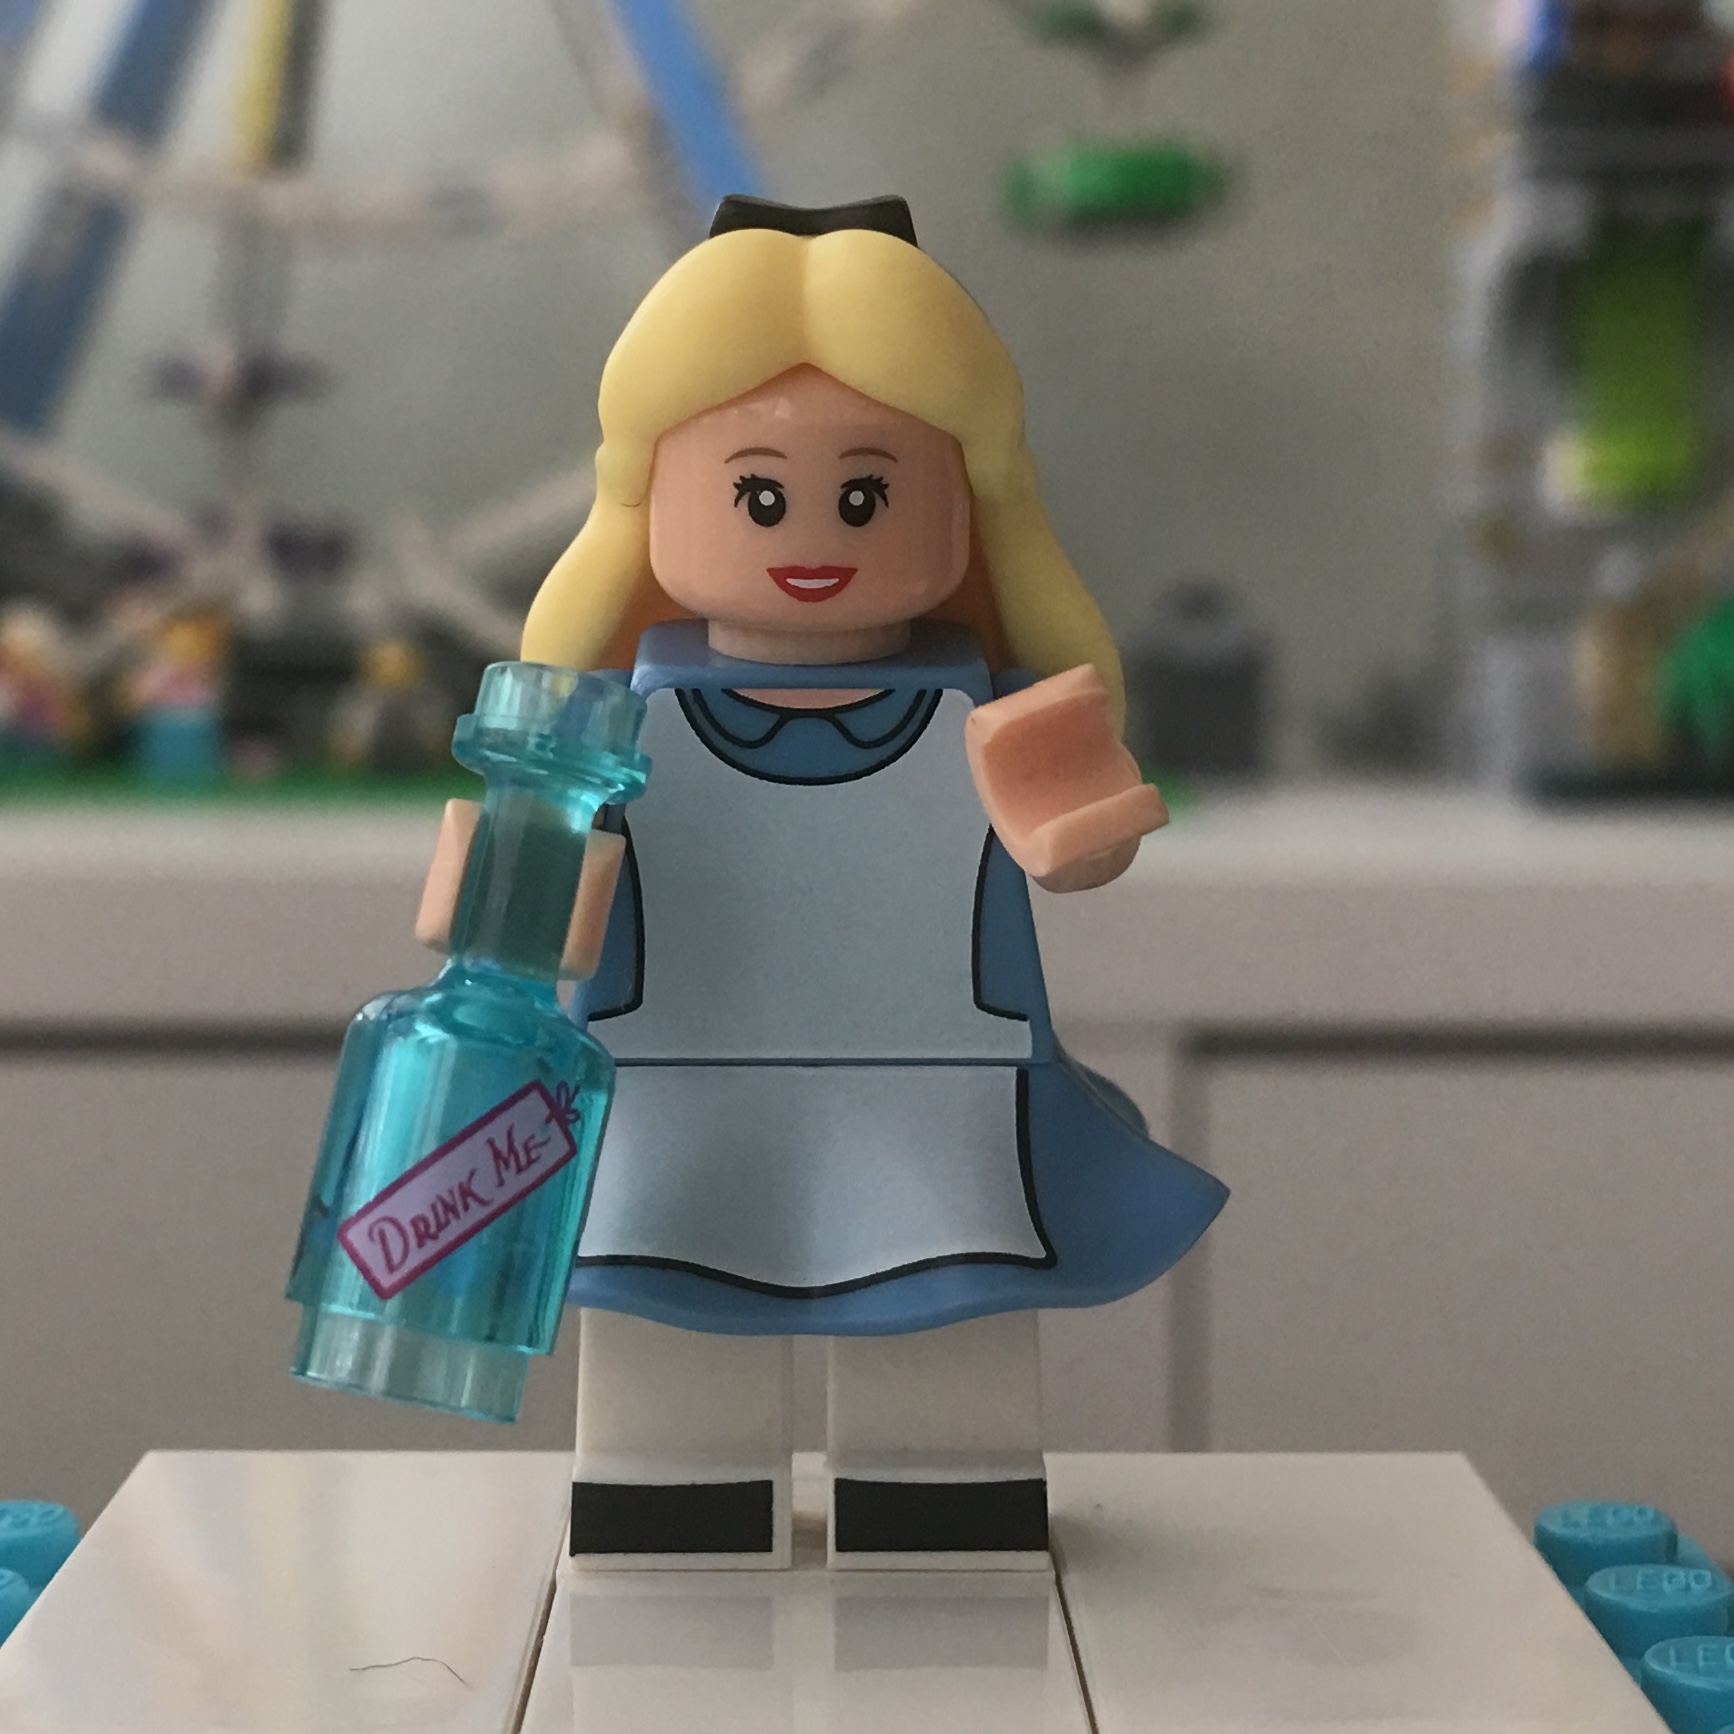 LEGO Collectible Disney Alice (in Wonderland) Minifigure - Complete Set